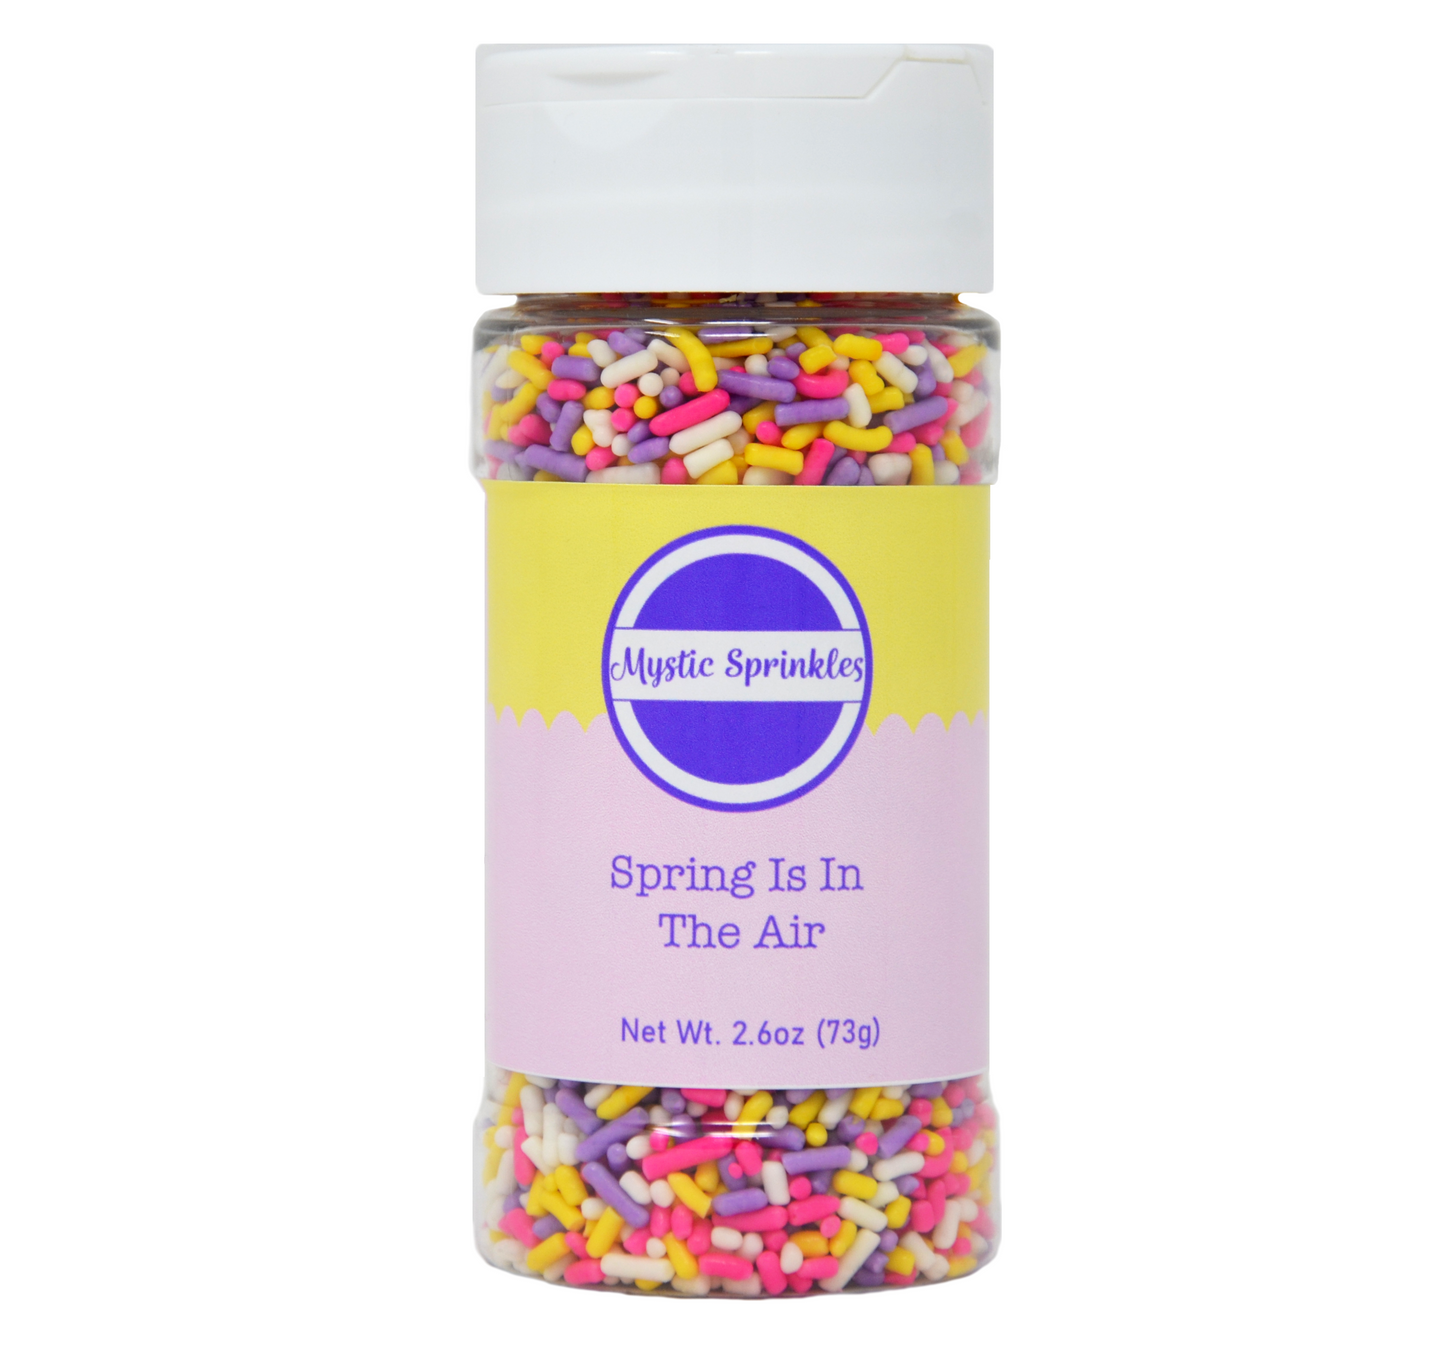 Mystic Sprinkles Flower Power Sprinkle Mix 3.5 oz Bottle